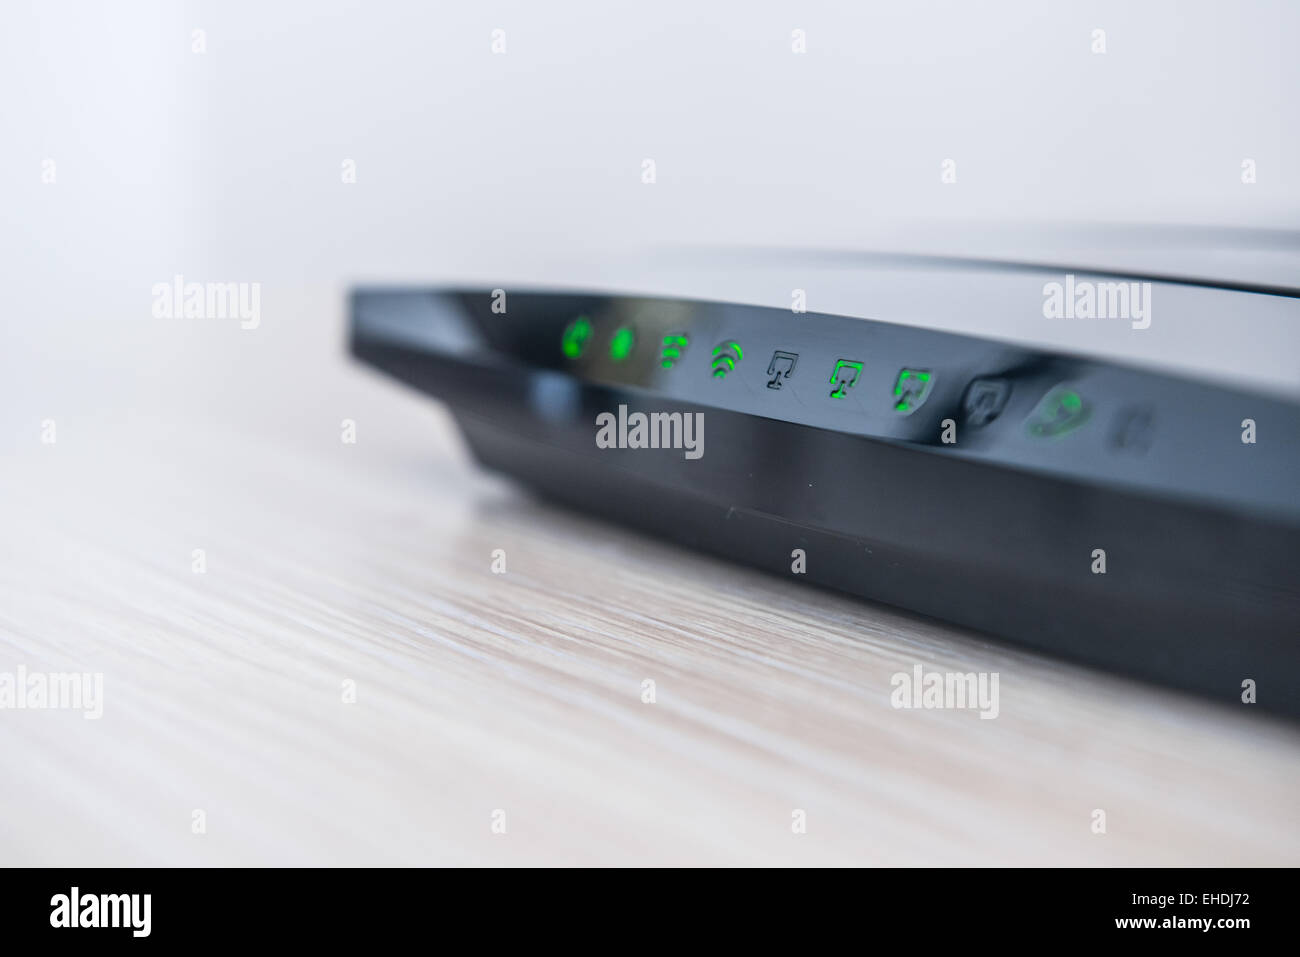 black, shiny router on white background Stock Photo